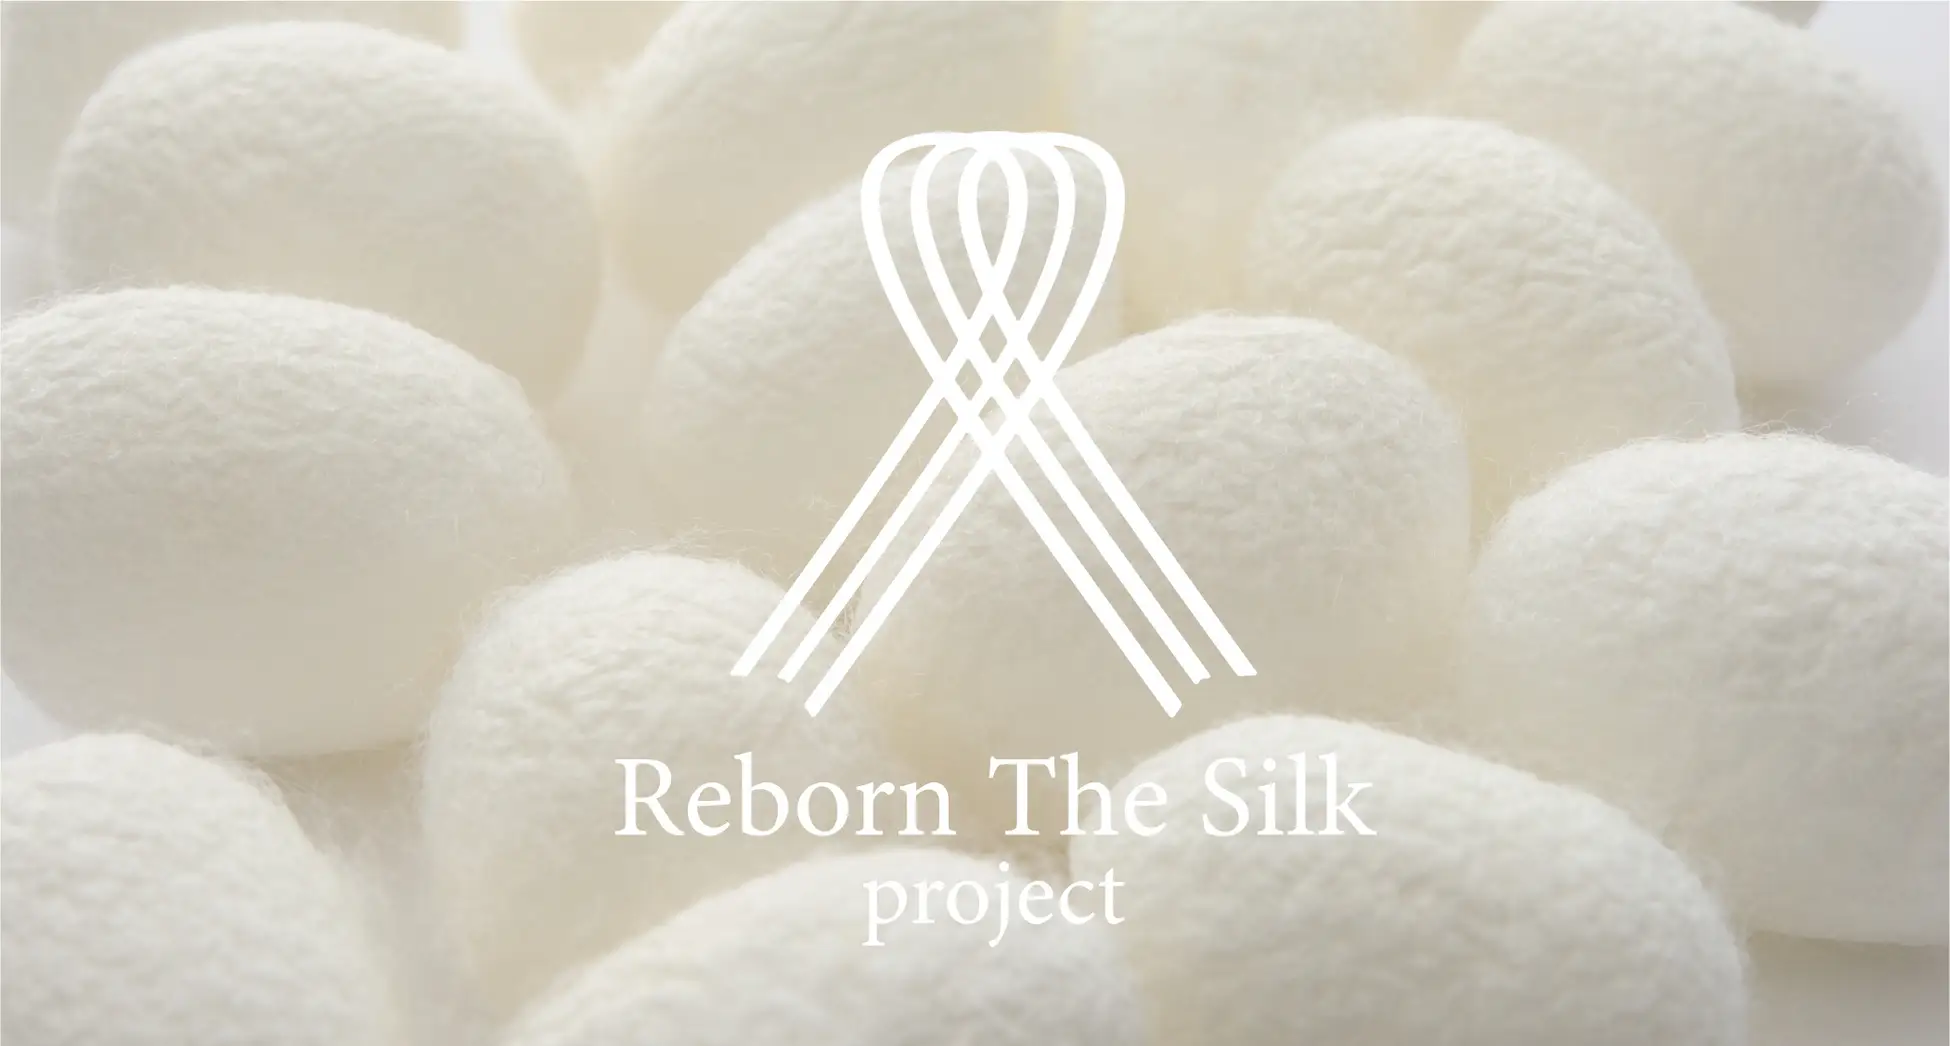 Reborn The Silk project